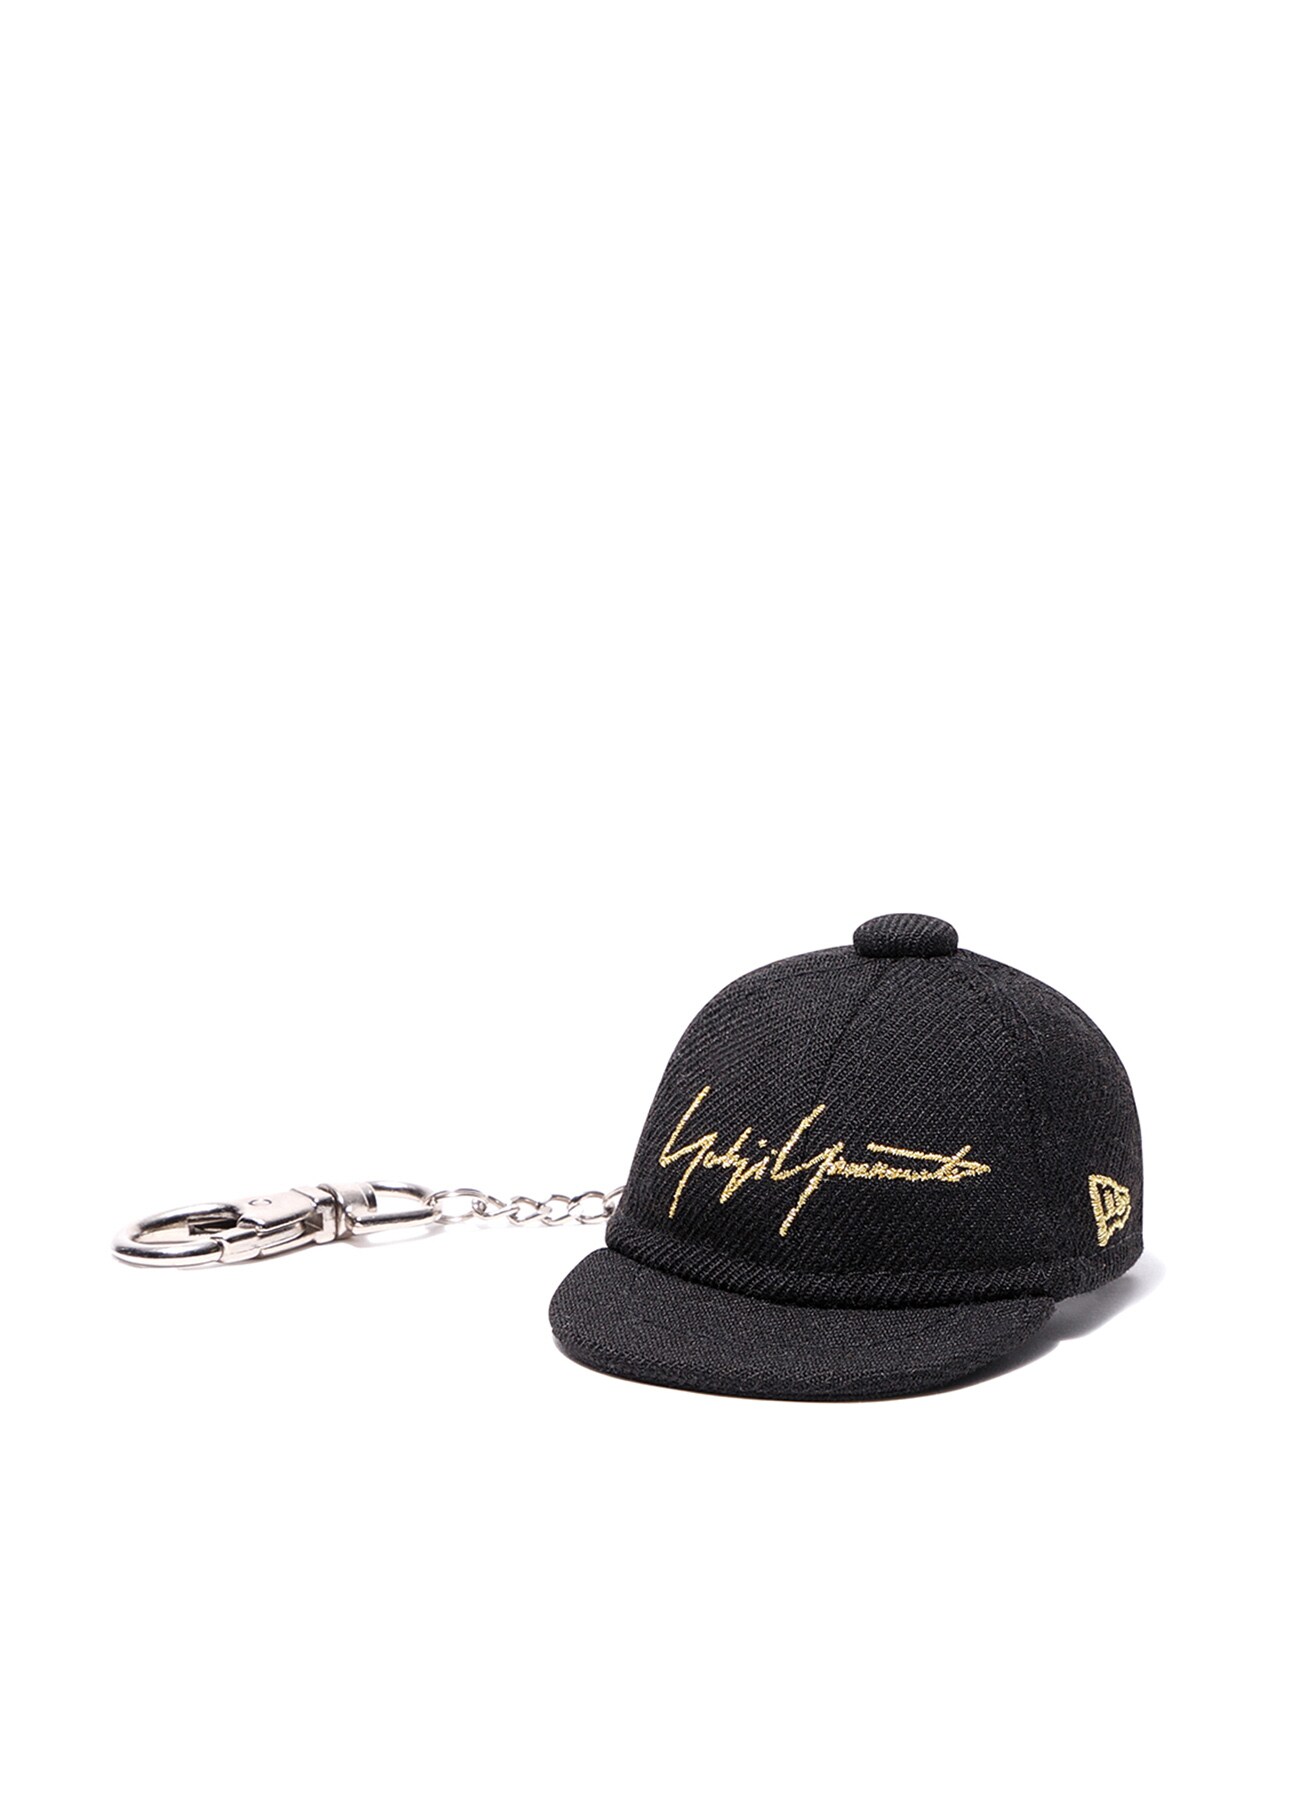 Yohji Yamamoto × New Era BLACK SERGE CAP KEYHOLDER BLACK/GOLD